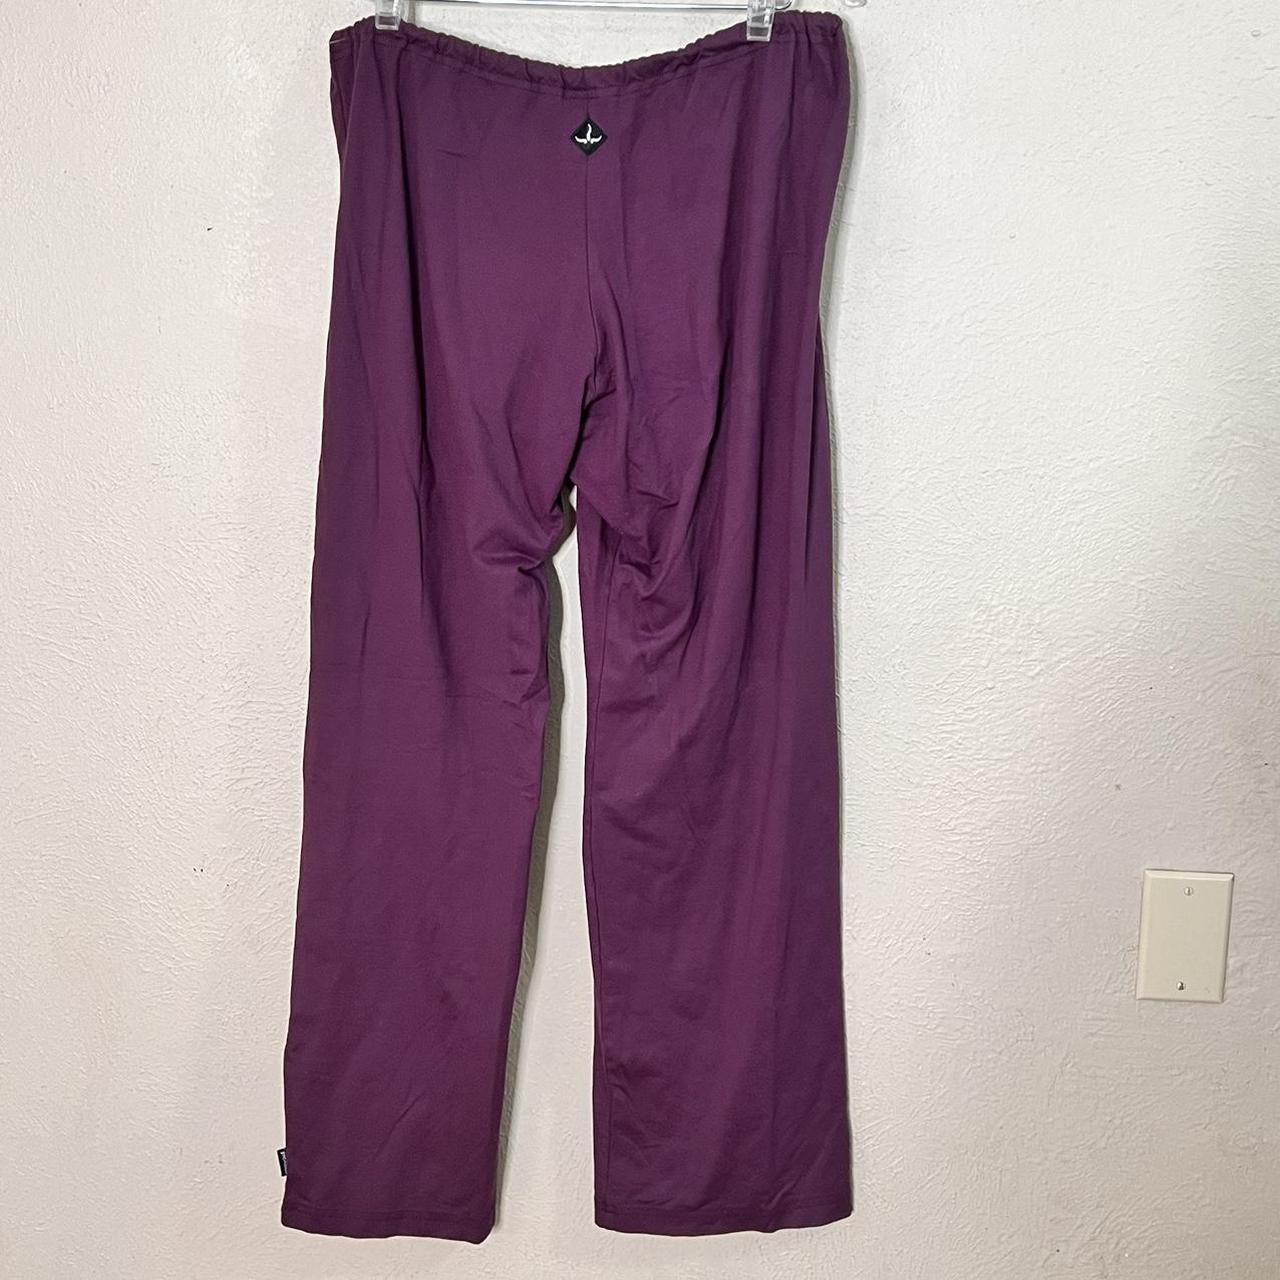 Prana purple be present yoga pants Drawstring - Depop